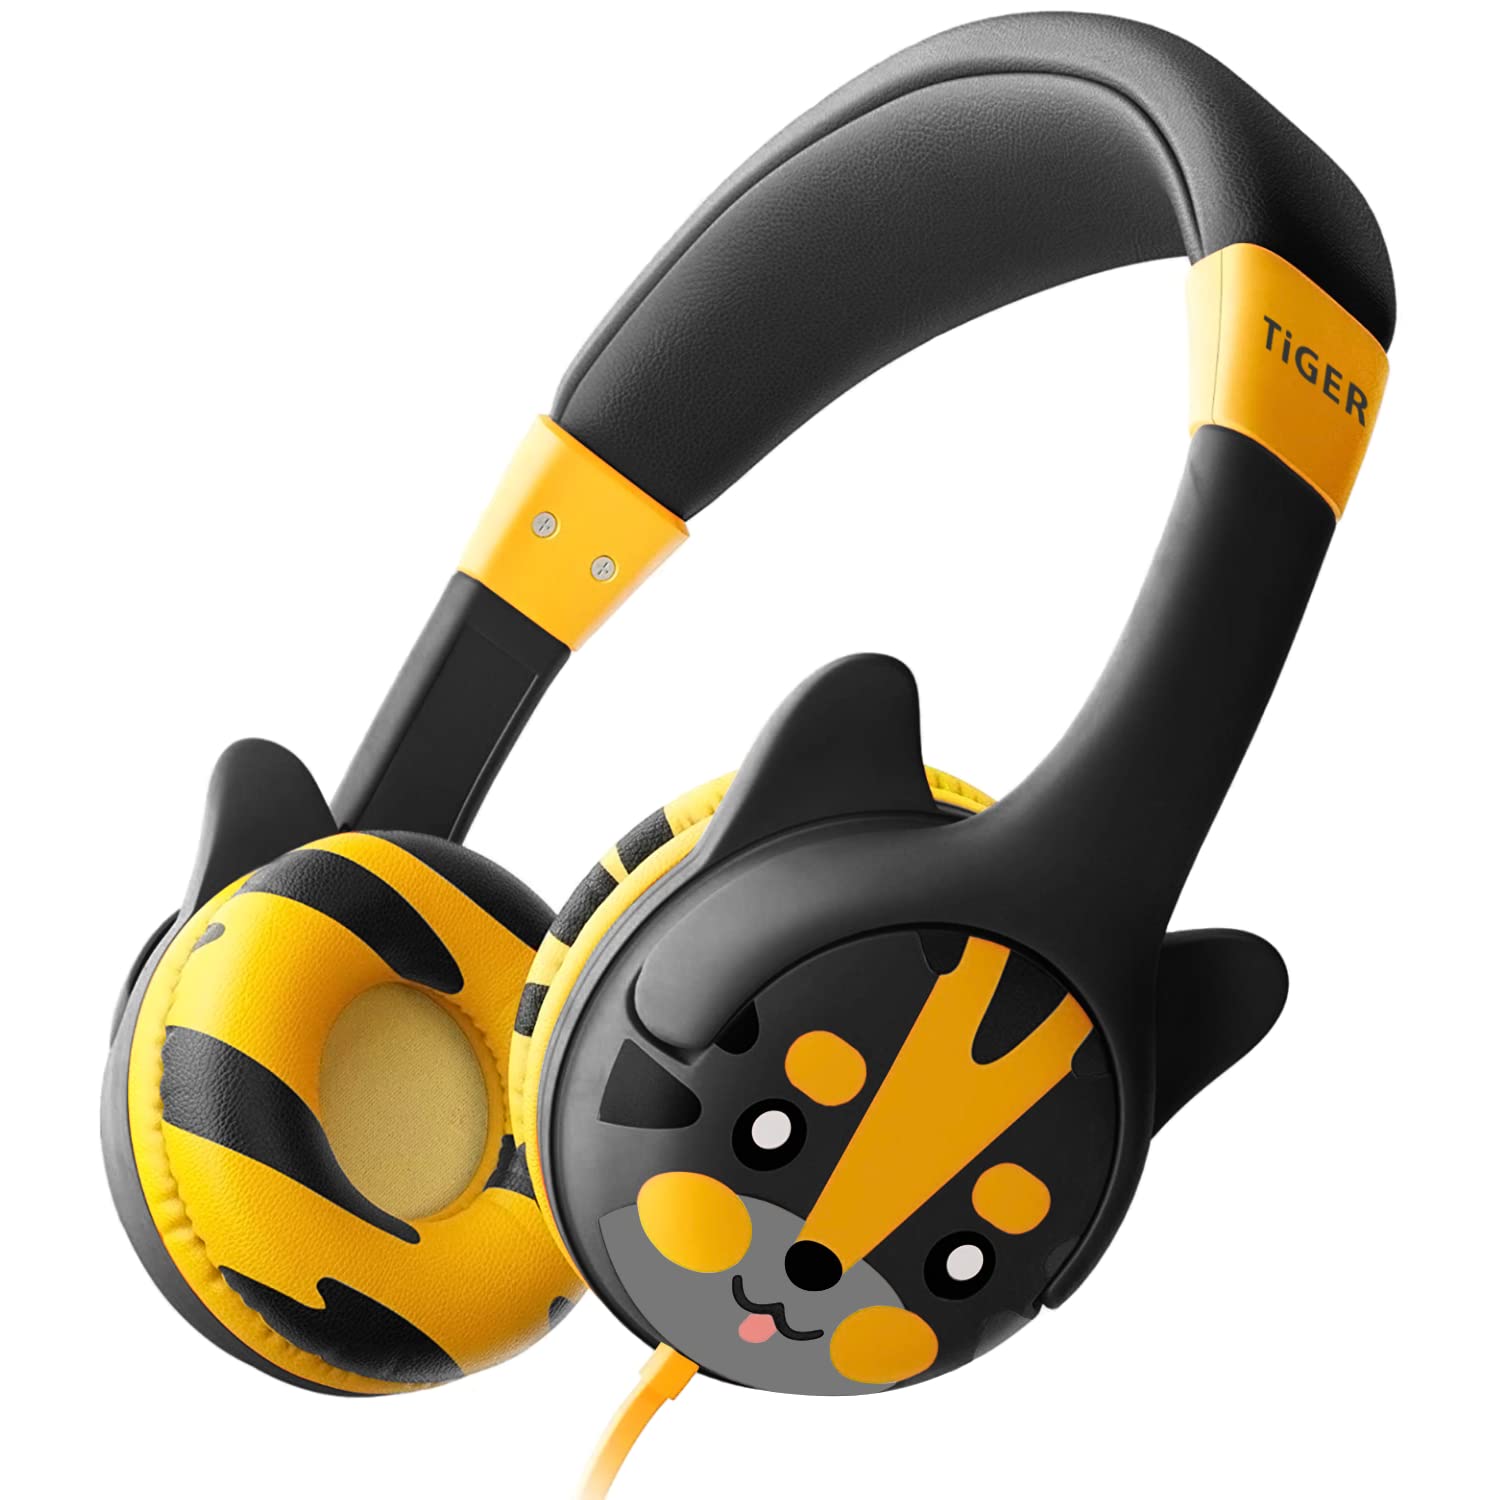 Kidrox Toddler Headphones for 2-7 Years Old - Kids Headphones Wired for Boys & Girls - 85dB Volume Limiting Children Head Phones for School, Airplane, Travel, iPad, Tablet (Black, Tiger-Ear)